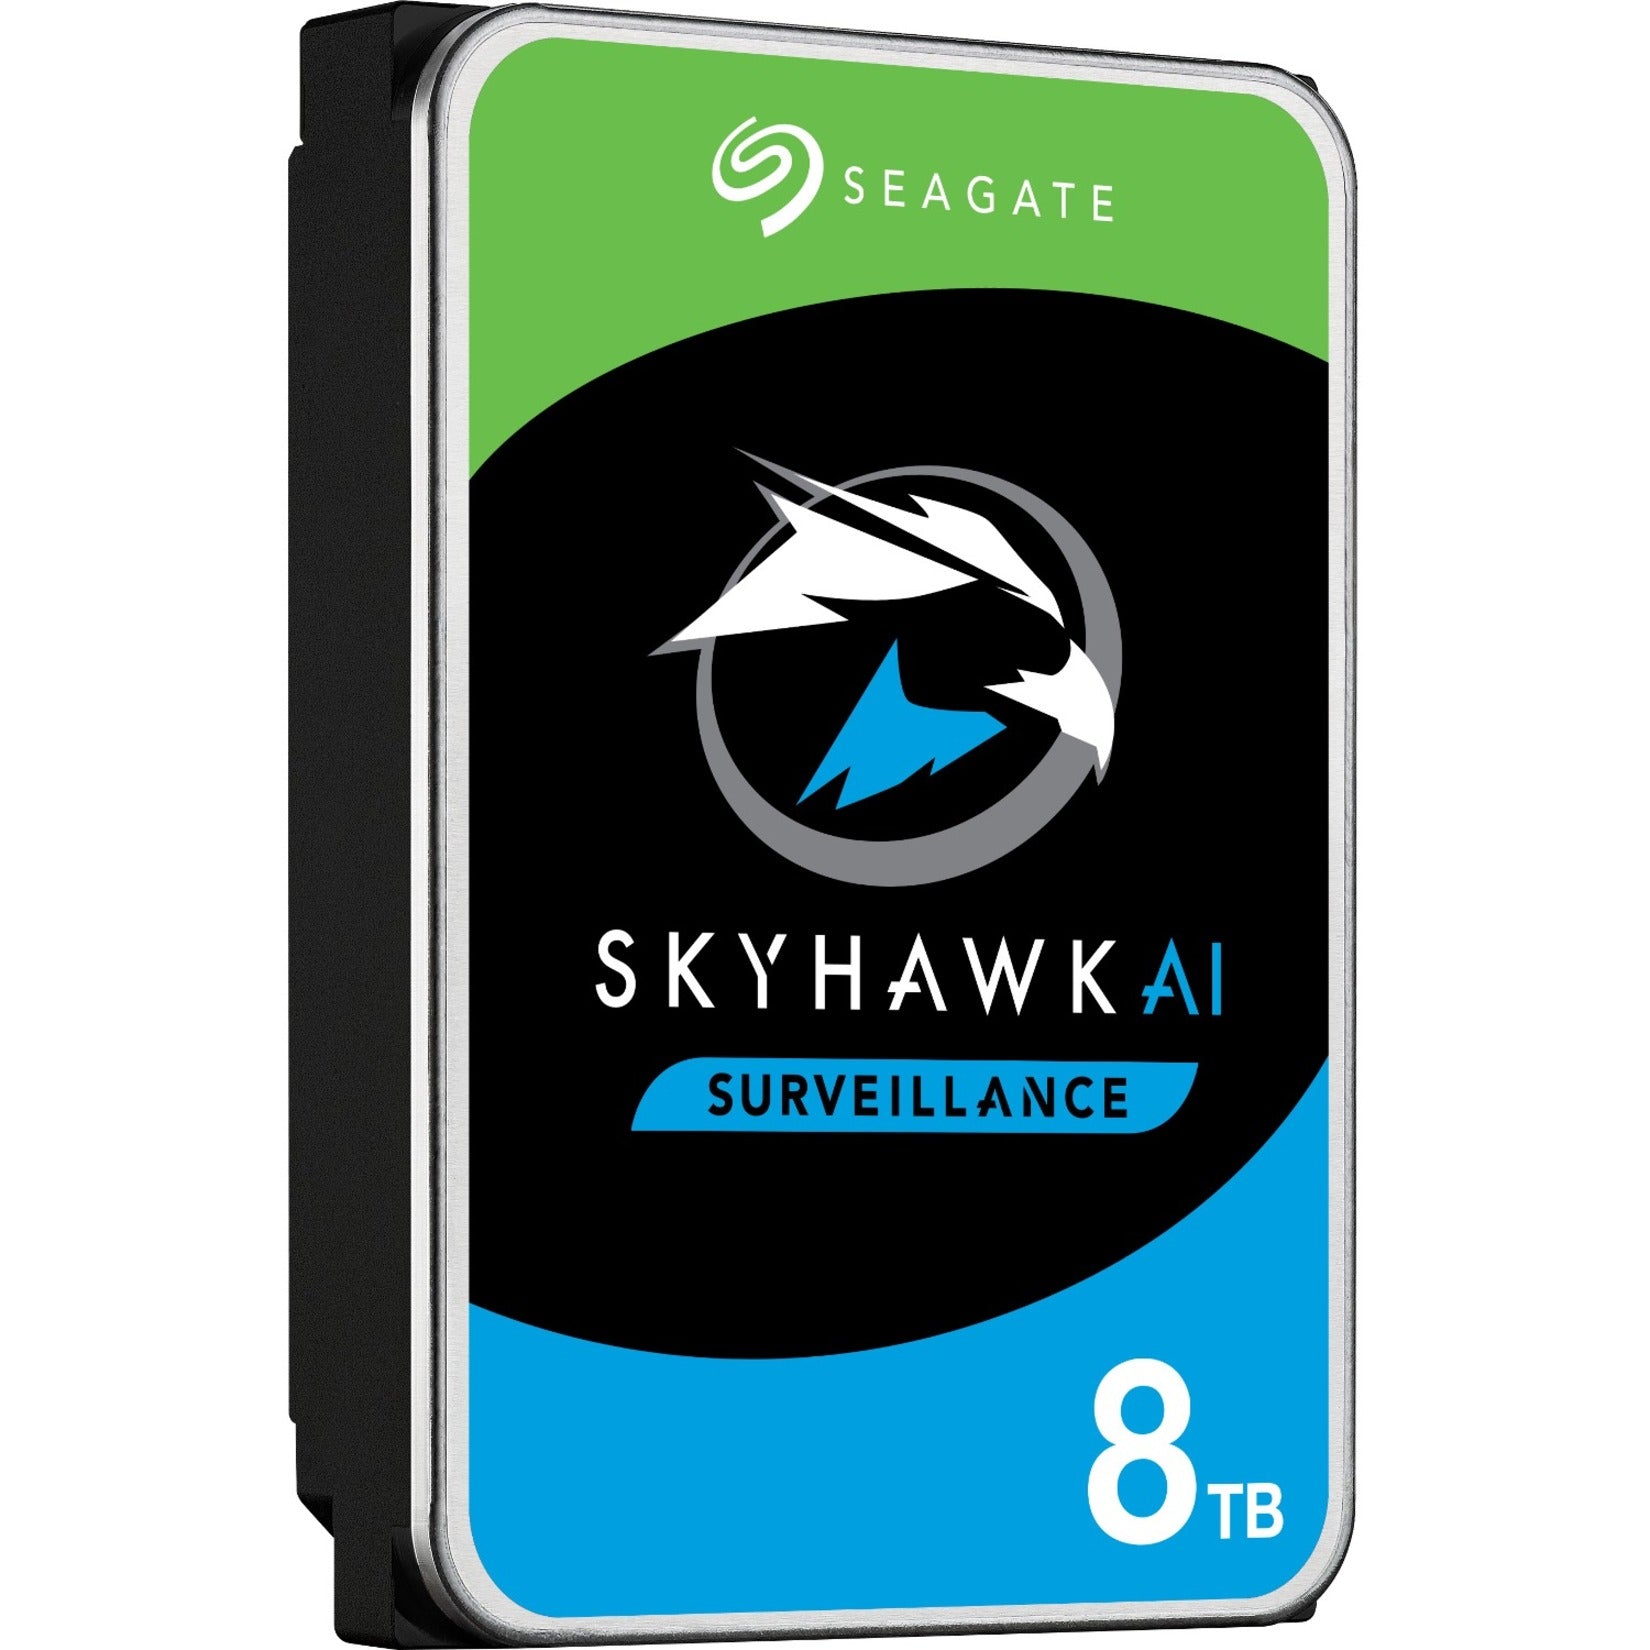 Seagate ST8000VE001 SkyHawk AI 8TB Hard Drive 24x7 surveillance storage.